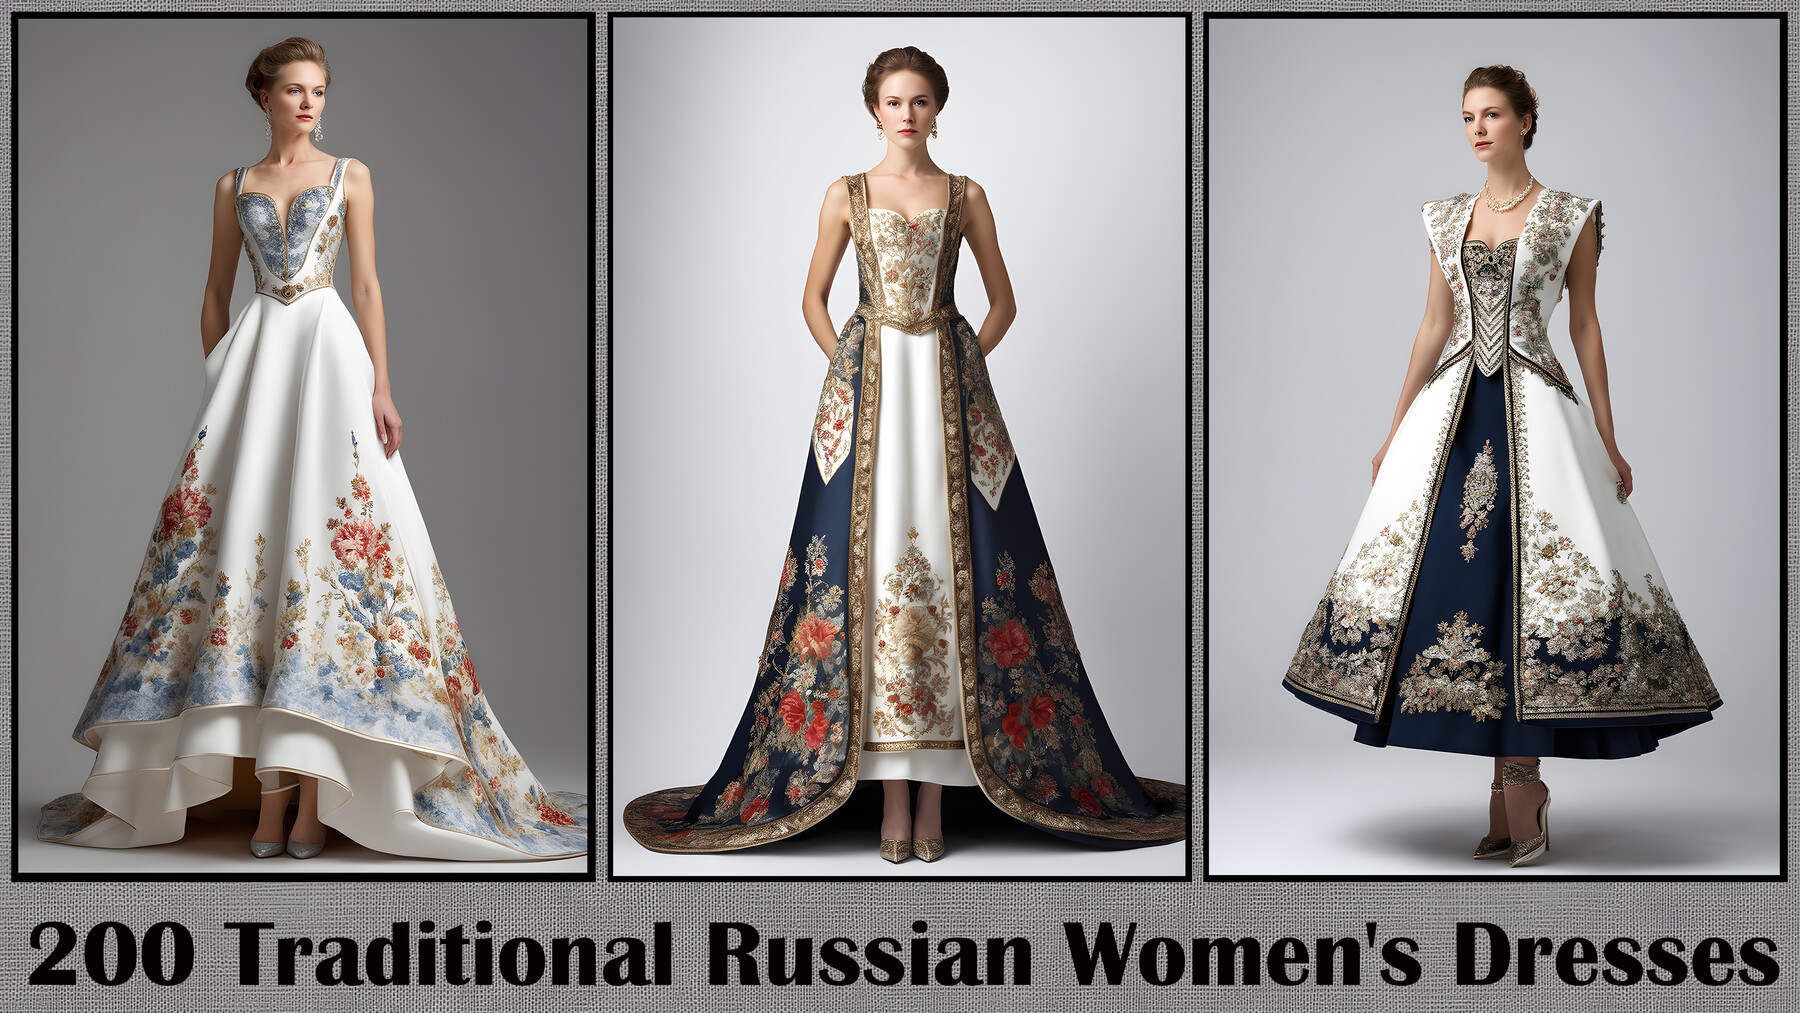 ArtStation - 200 Traditional Russian Women's Dresses | Artworks